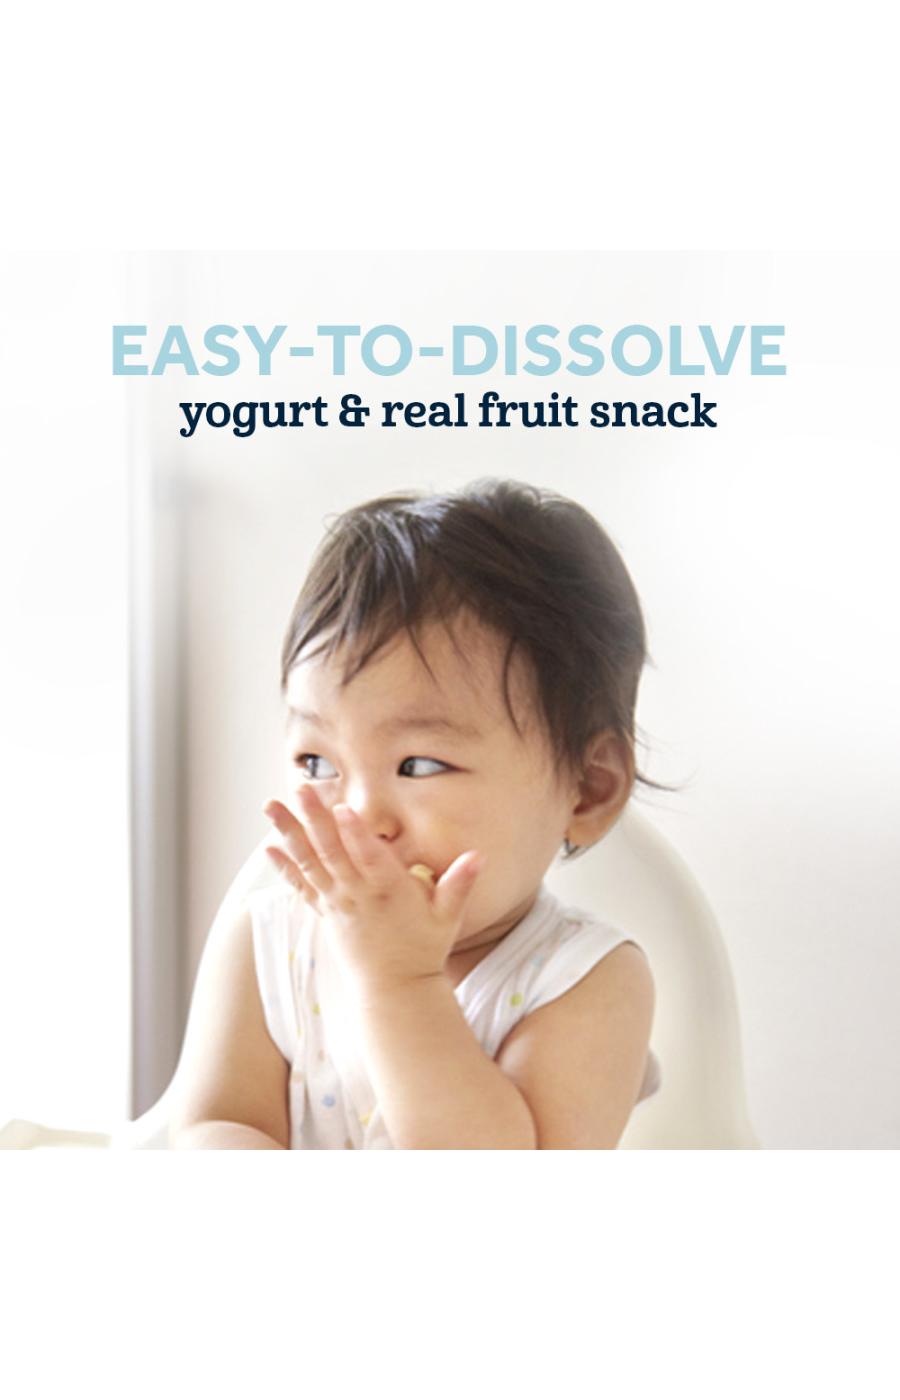 Gerber Snacks for Baby Yogurt Melts - Peach; image 4 of 8